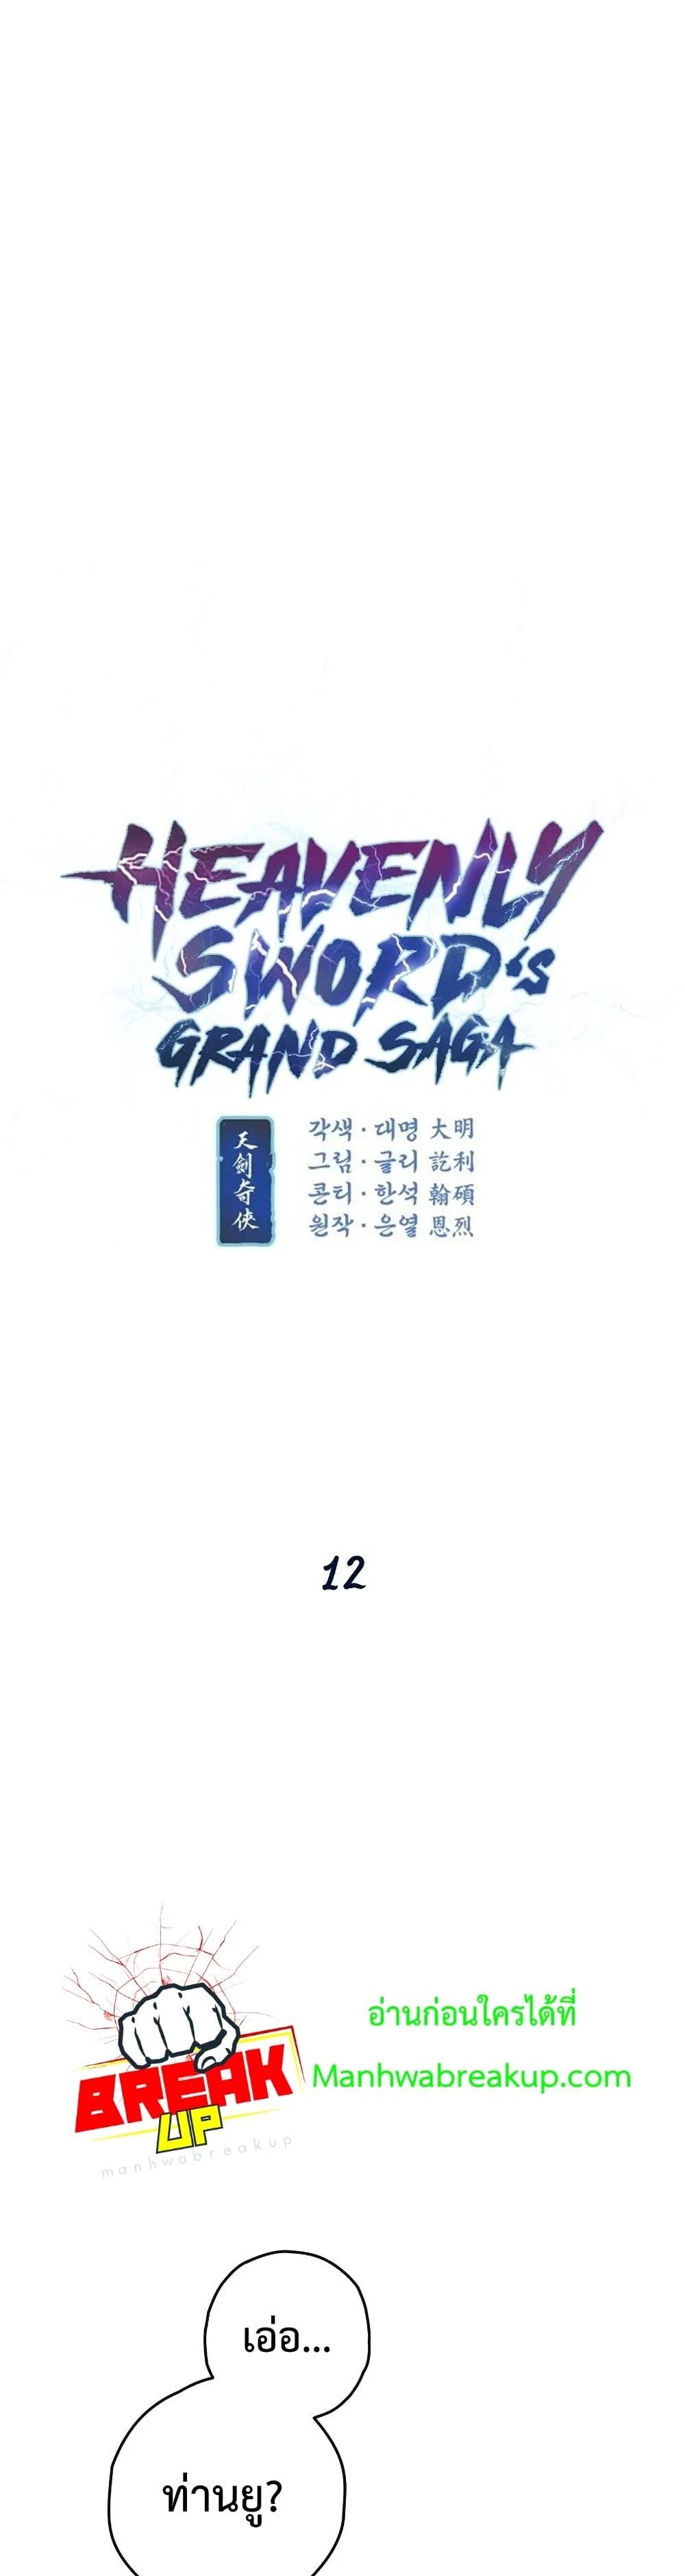 Heavenly Sword’s Grand Saga 12-12